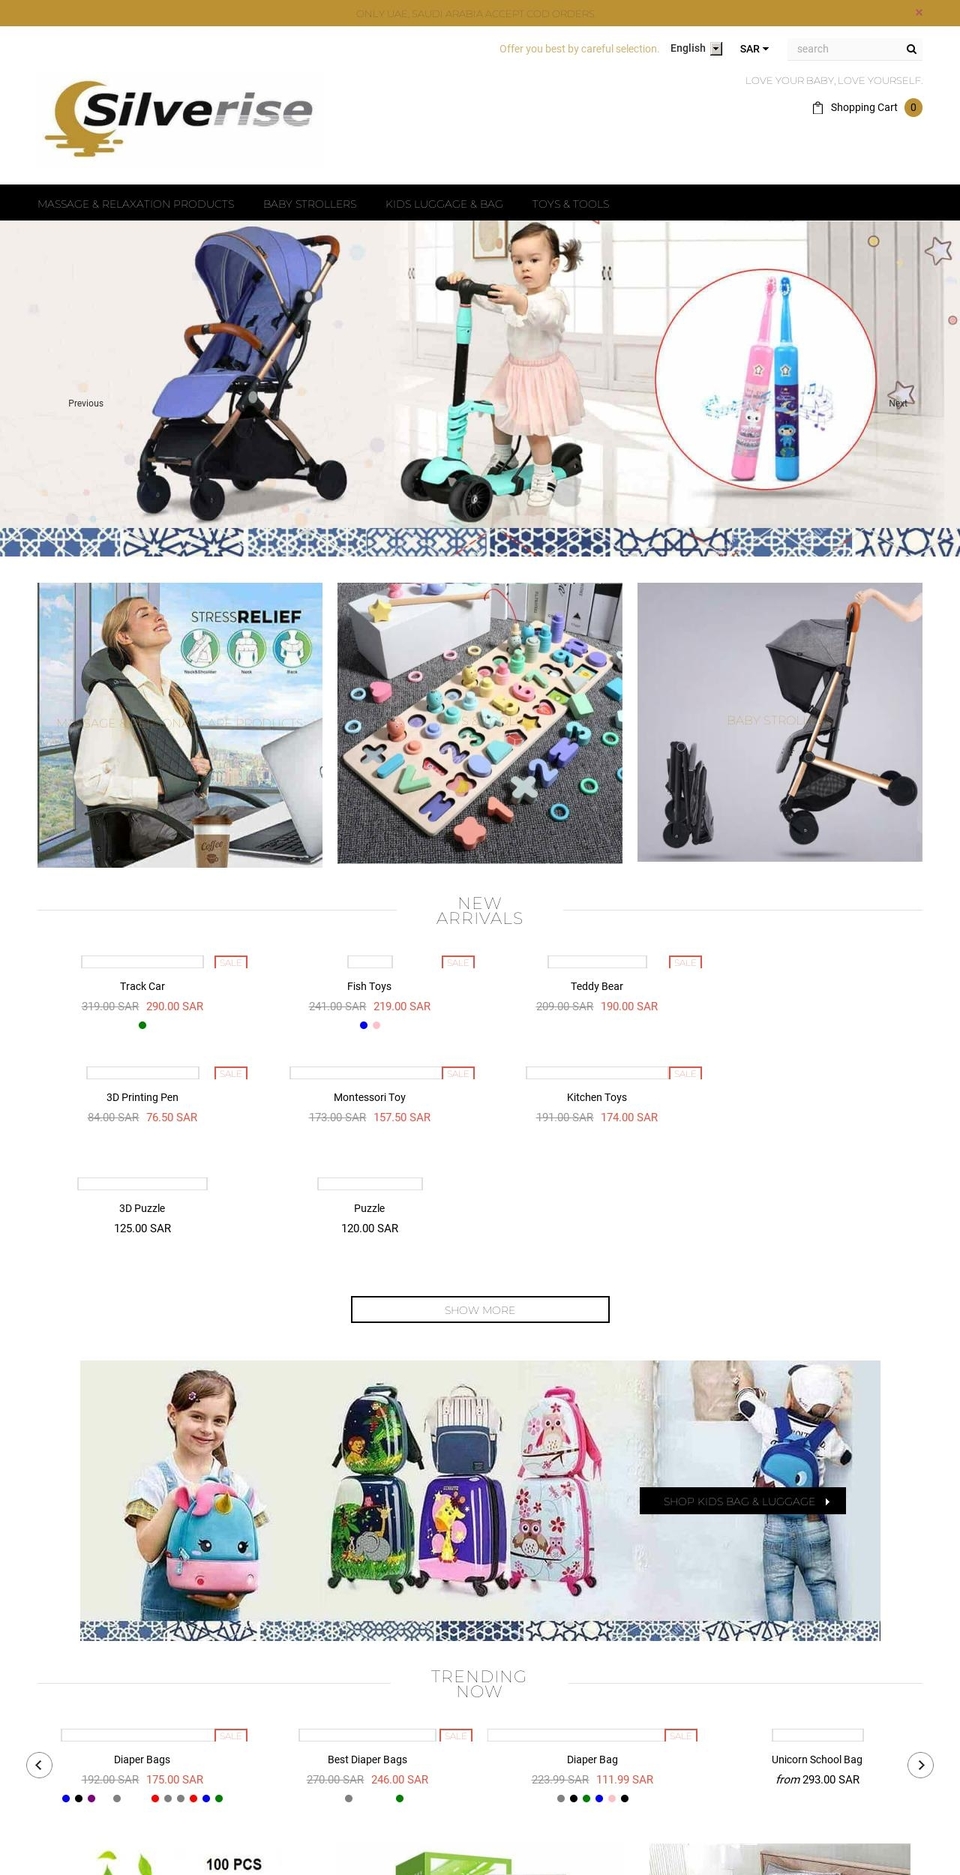 silverise.com.cn shopify website screenshot